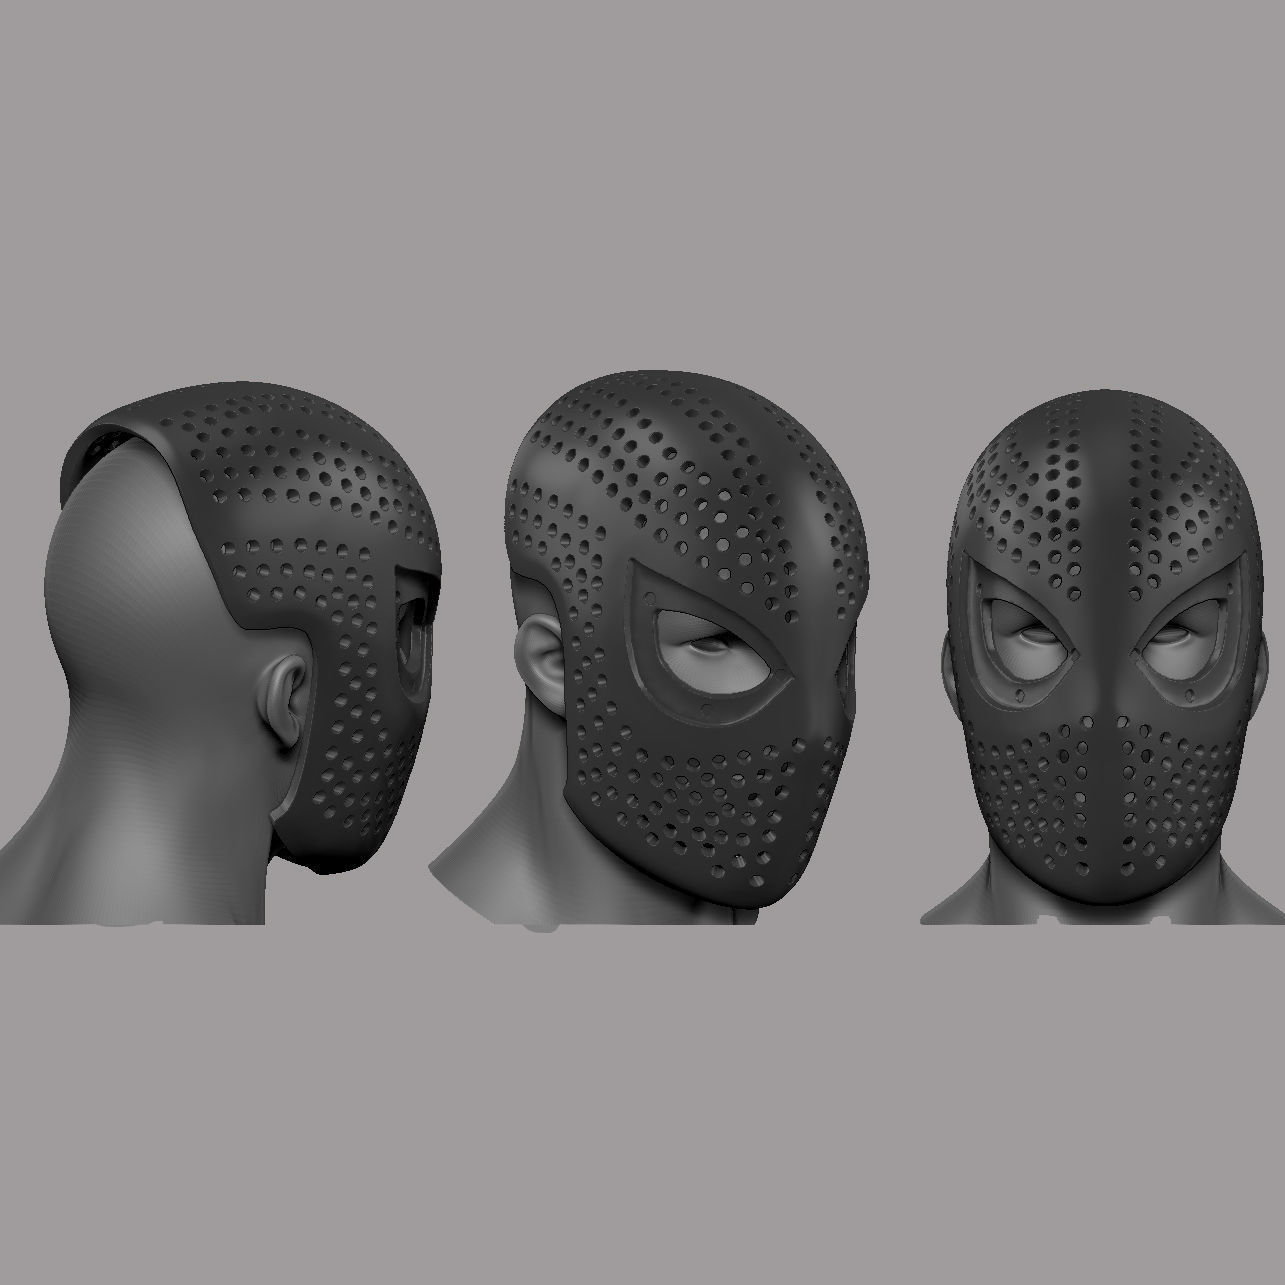 Spider Man Mask 3D Printing Model